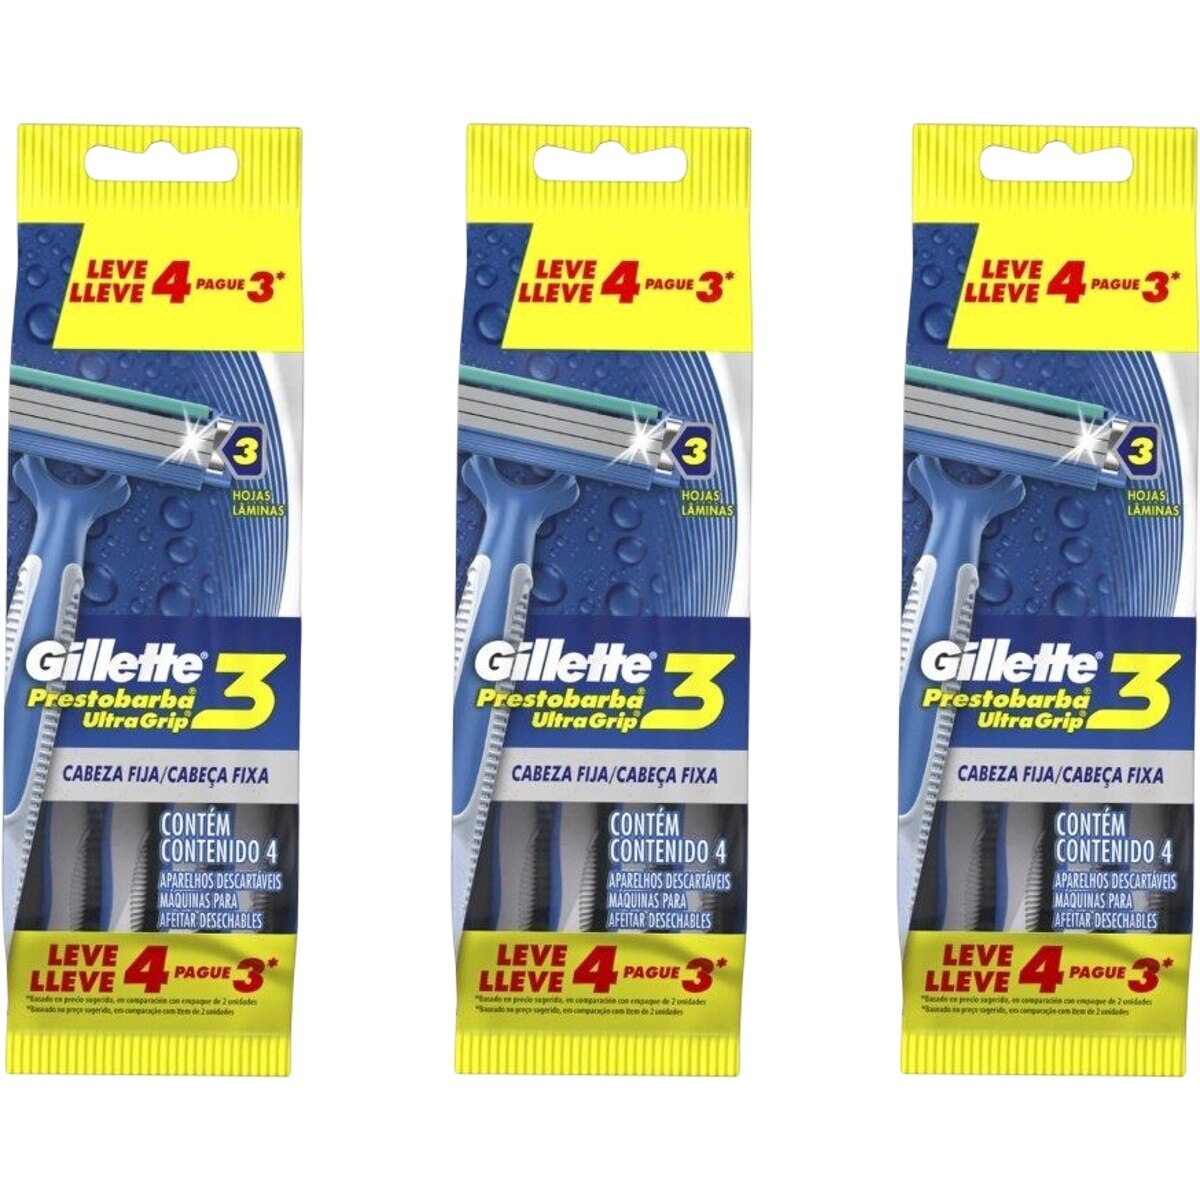 Kit 3 Unidades Aparelho de Barbear Gillette Prestobarba Ultragrip 3 Fixa Leve 4 Pague 3